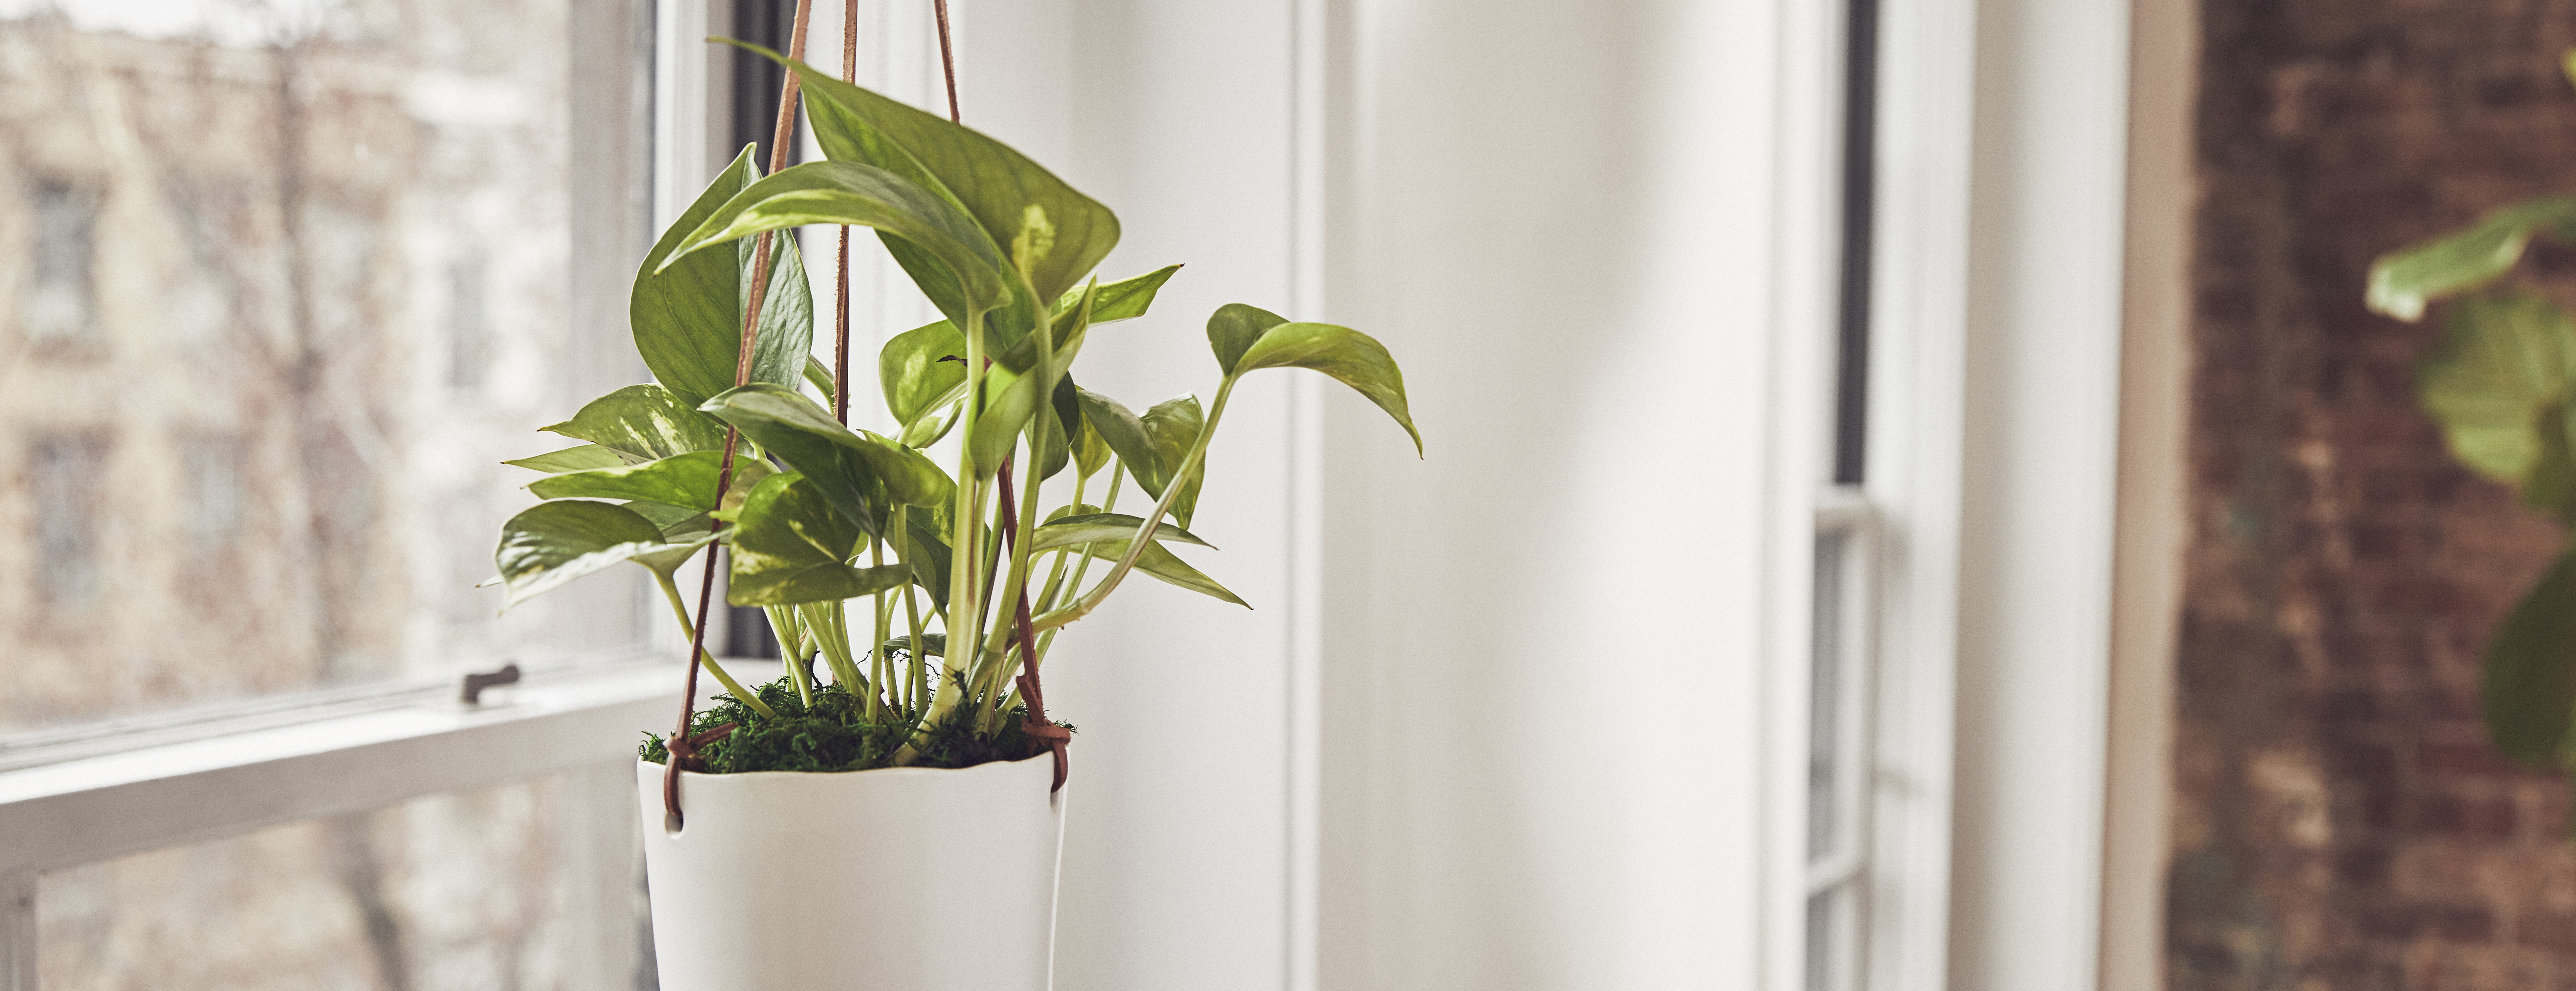 Pothos plant hanging in a sunlit window.